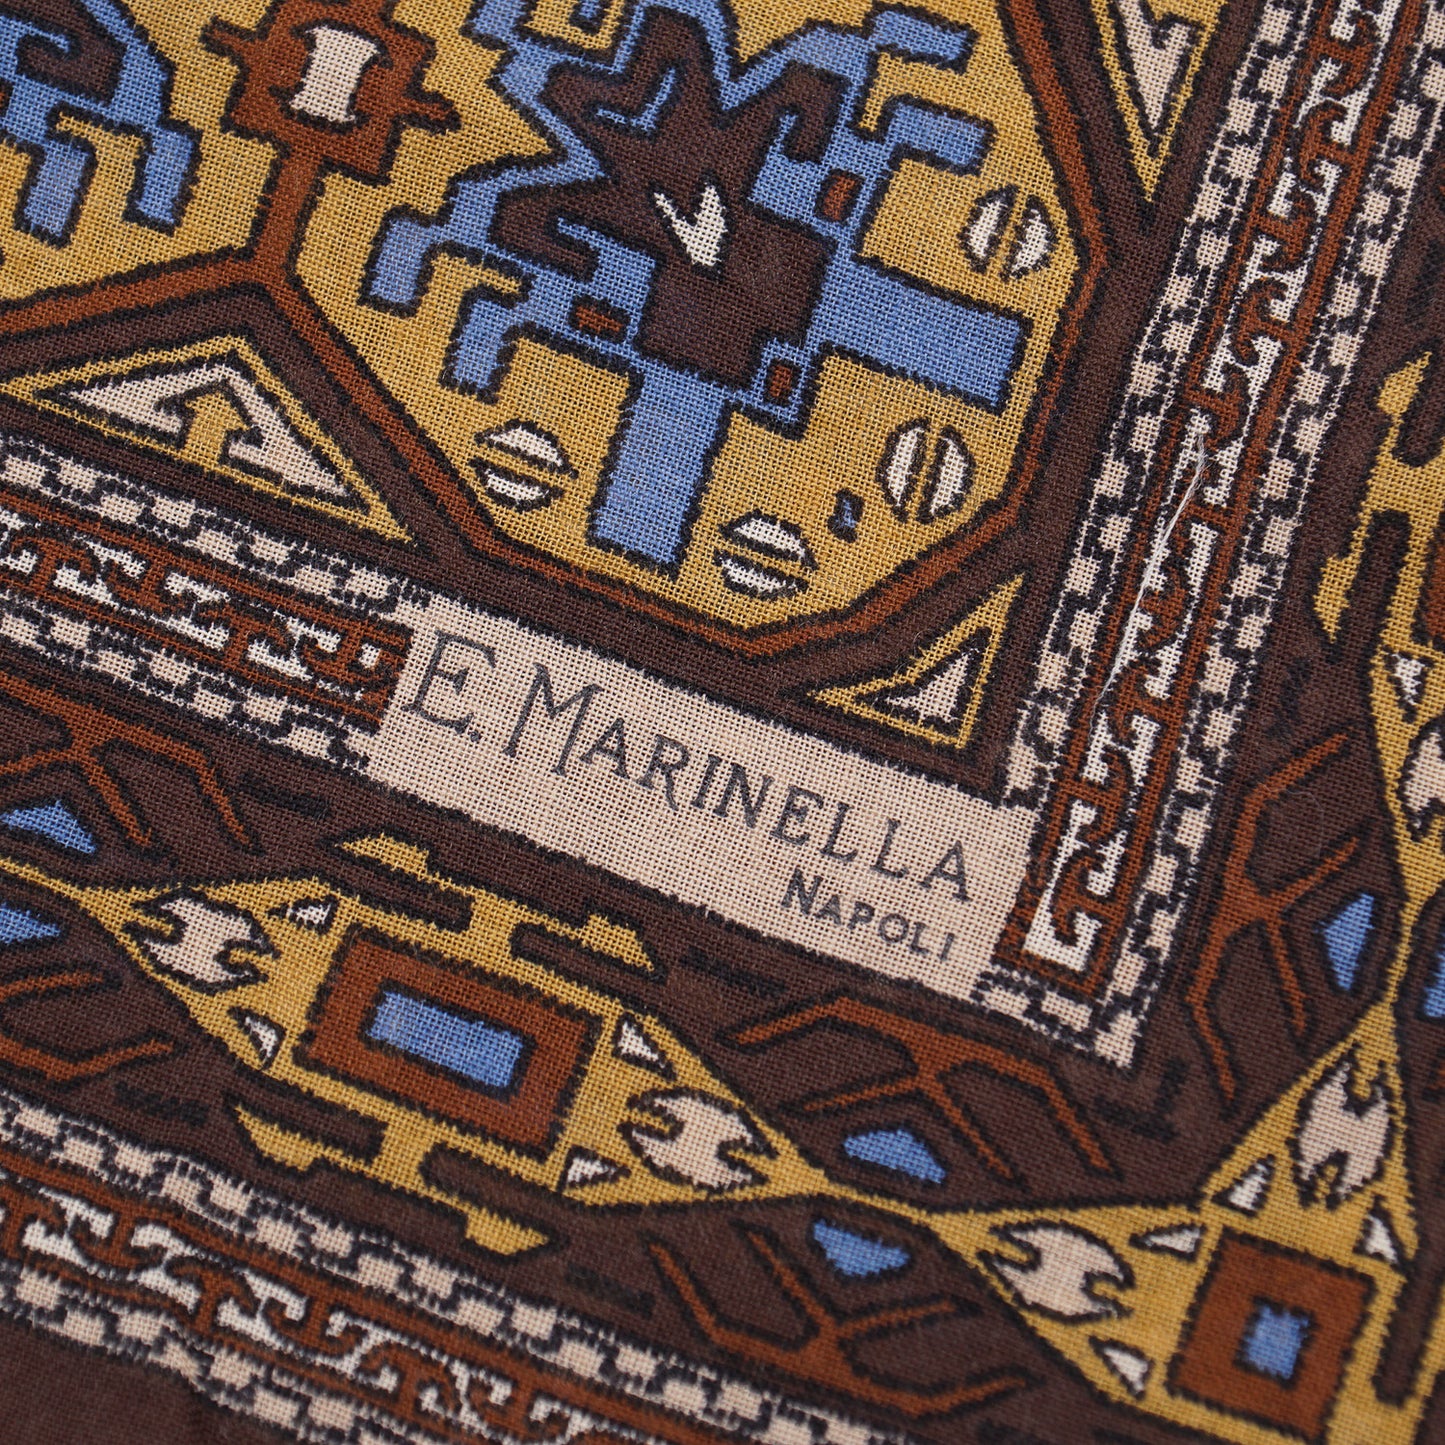 E.Marinella Printed Wool and Silk Scarf - Top Shelf Apparel